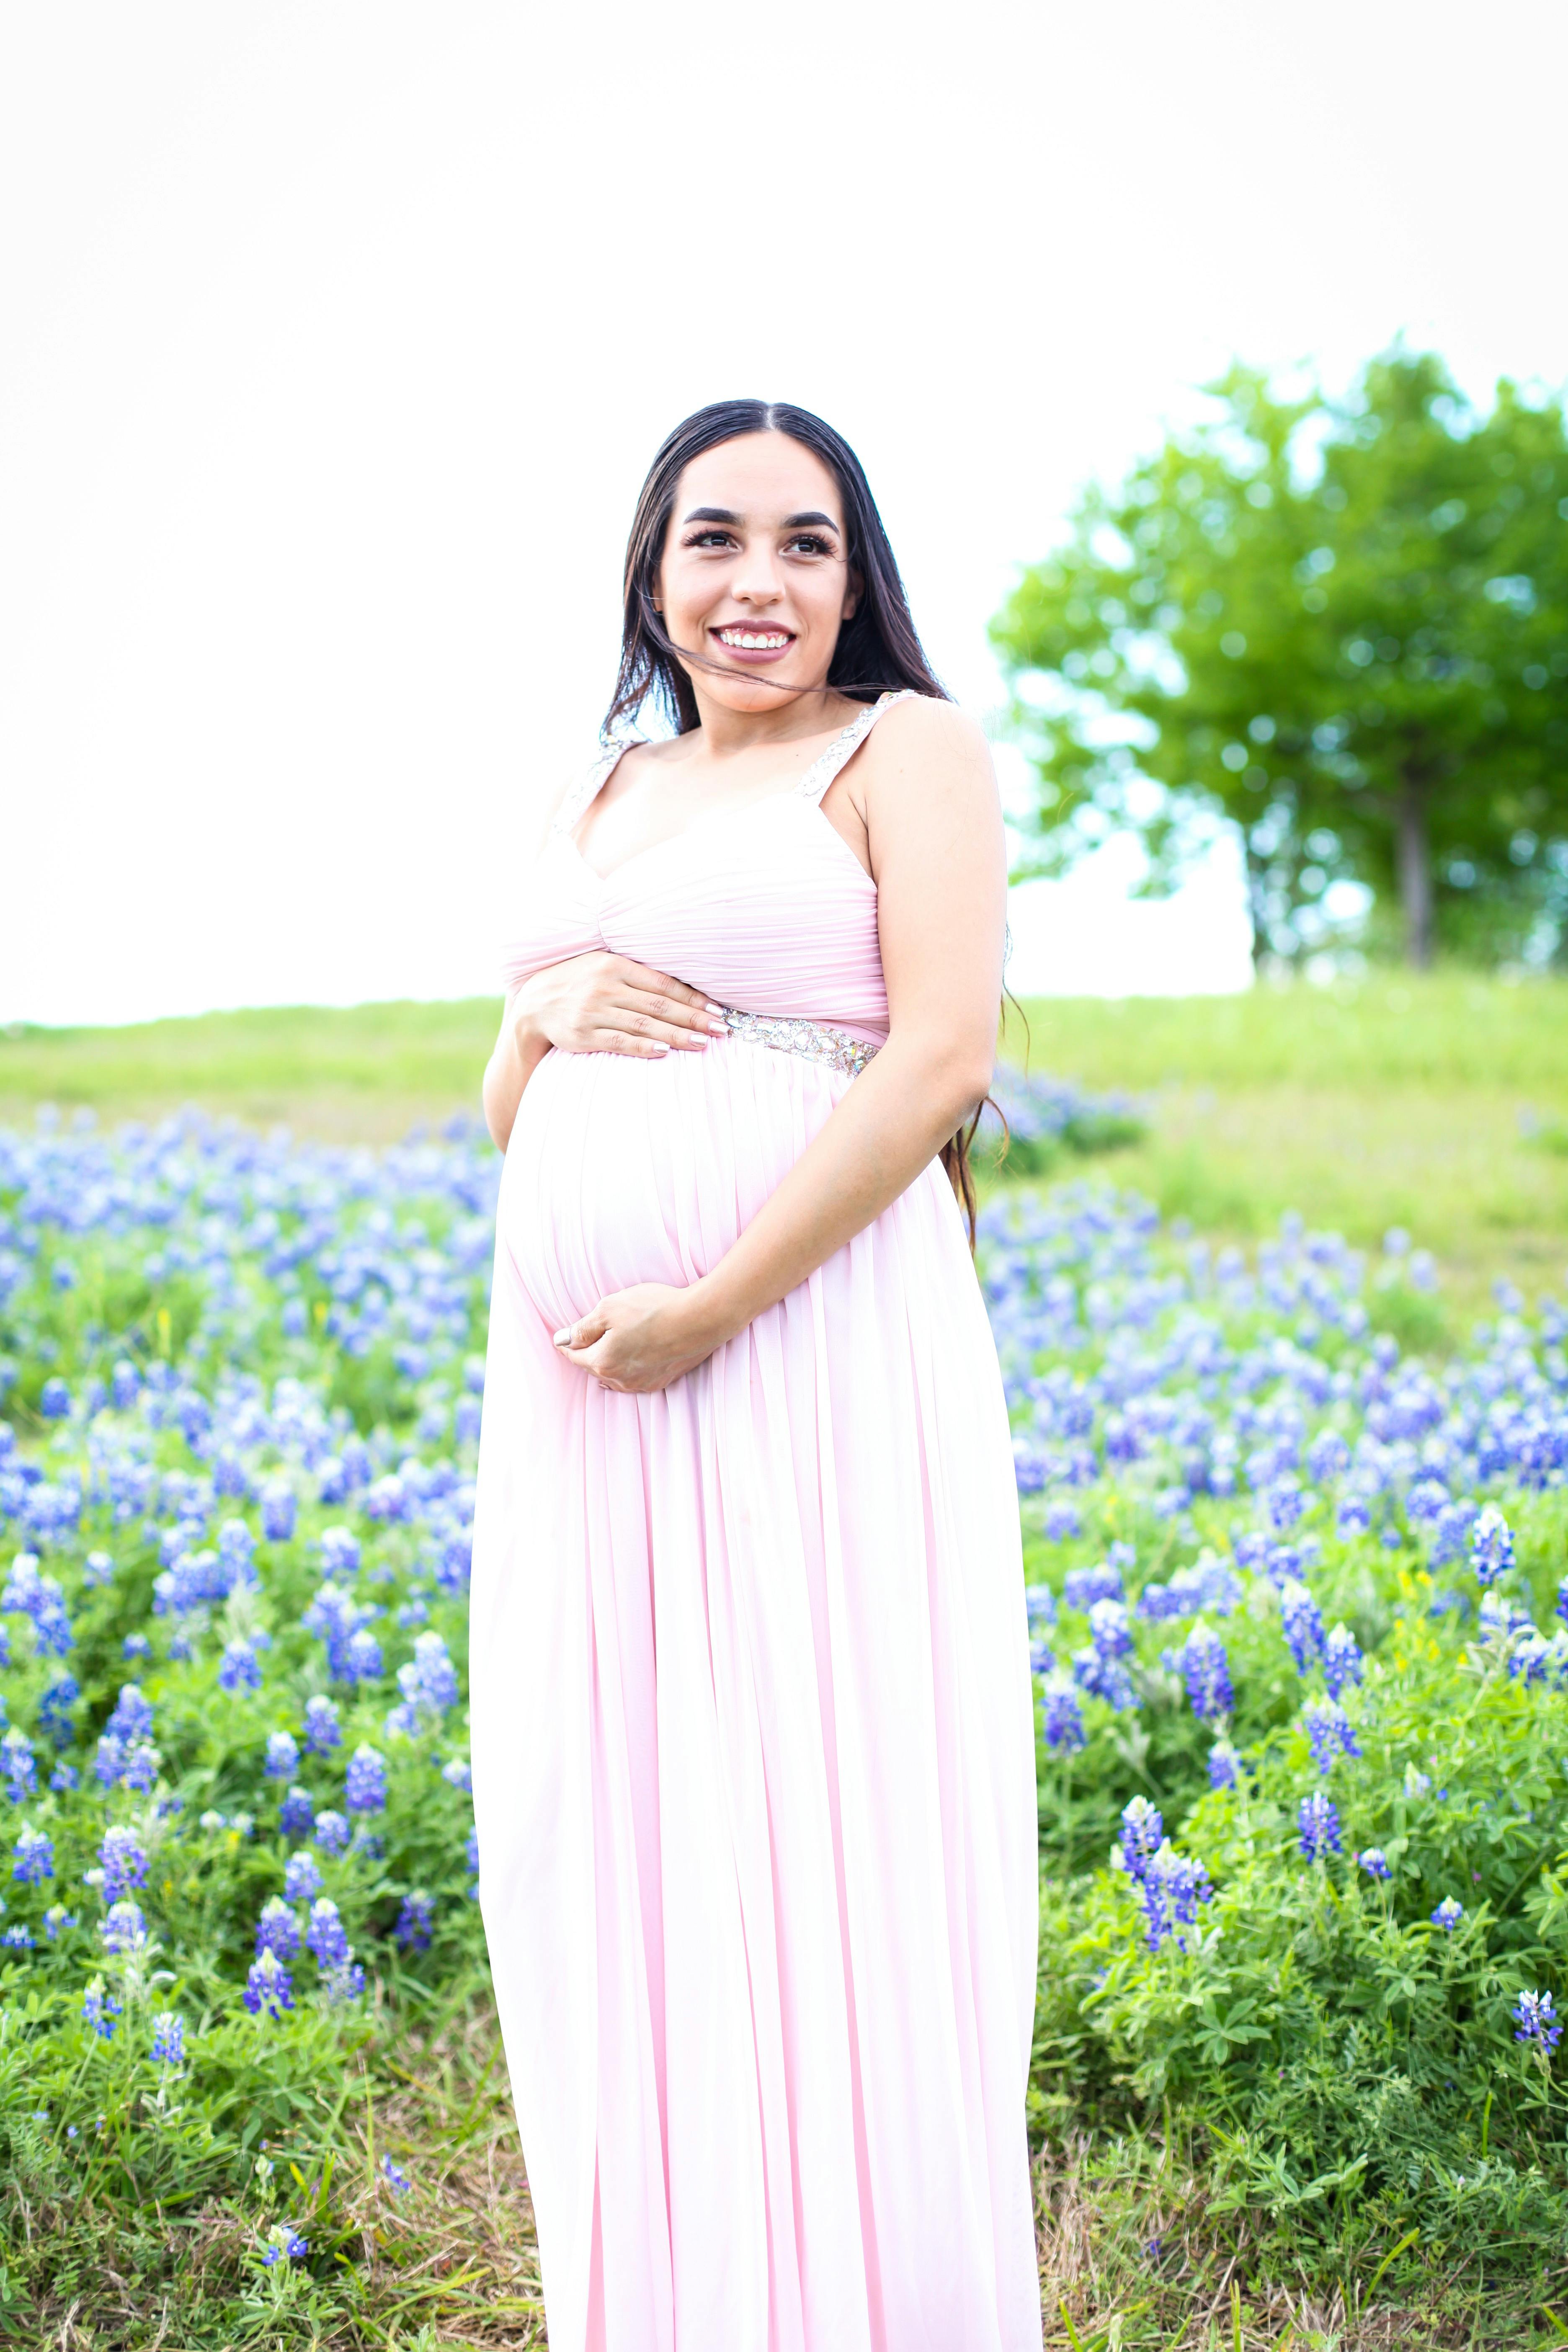 A smiling pregnant woman | Source: Pexels